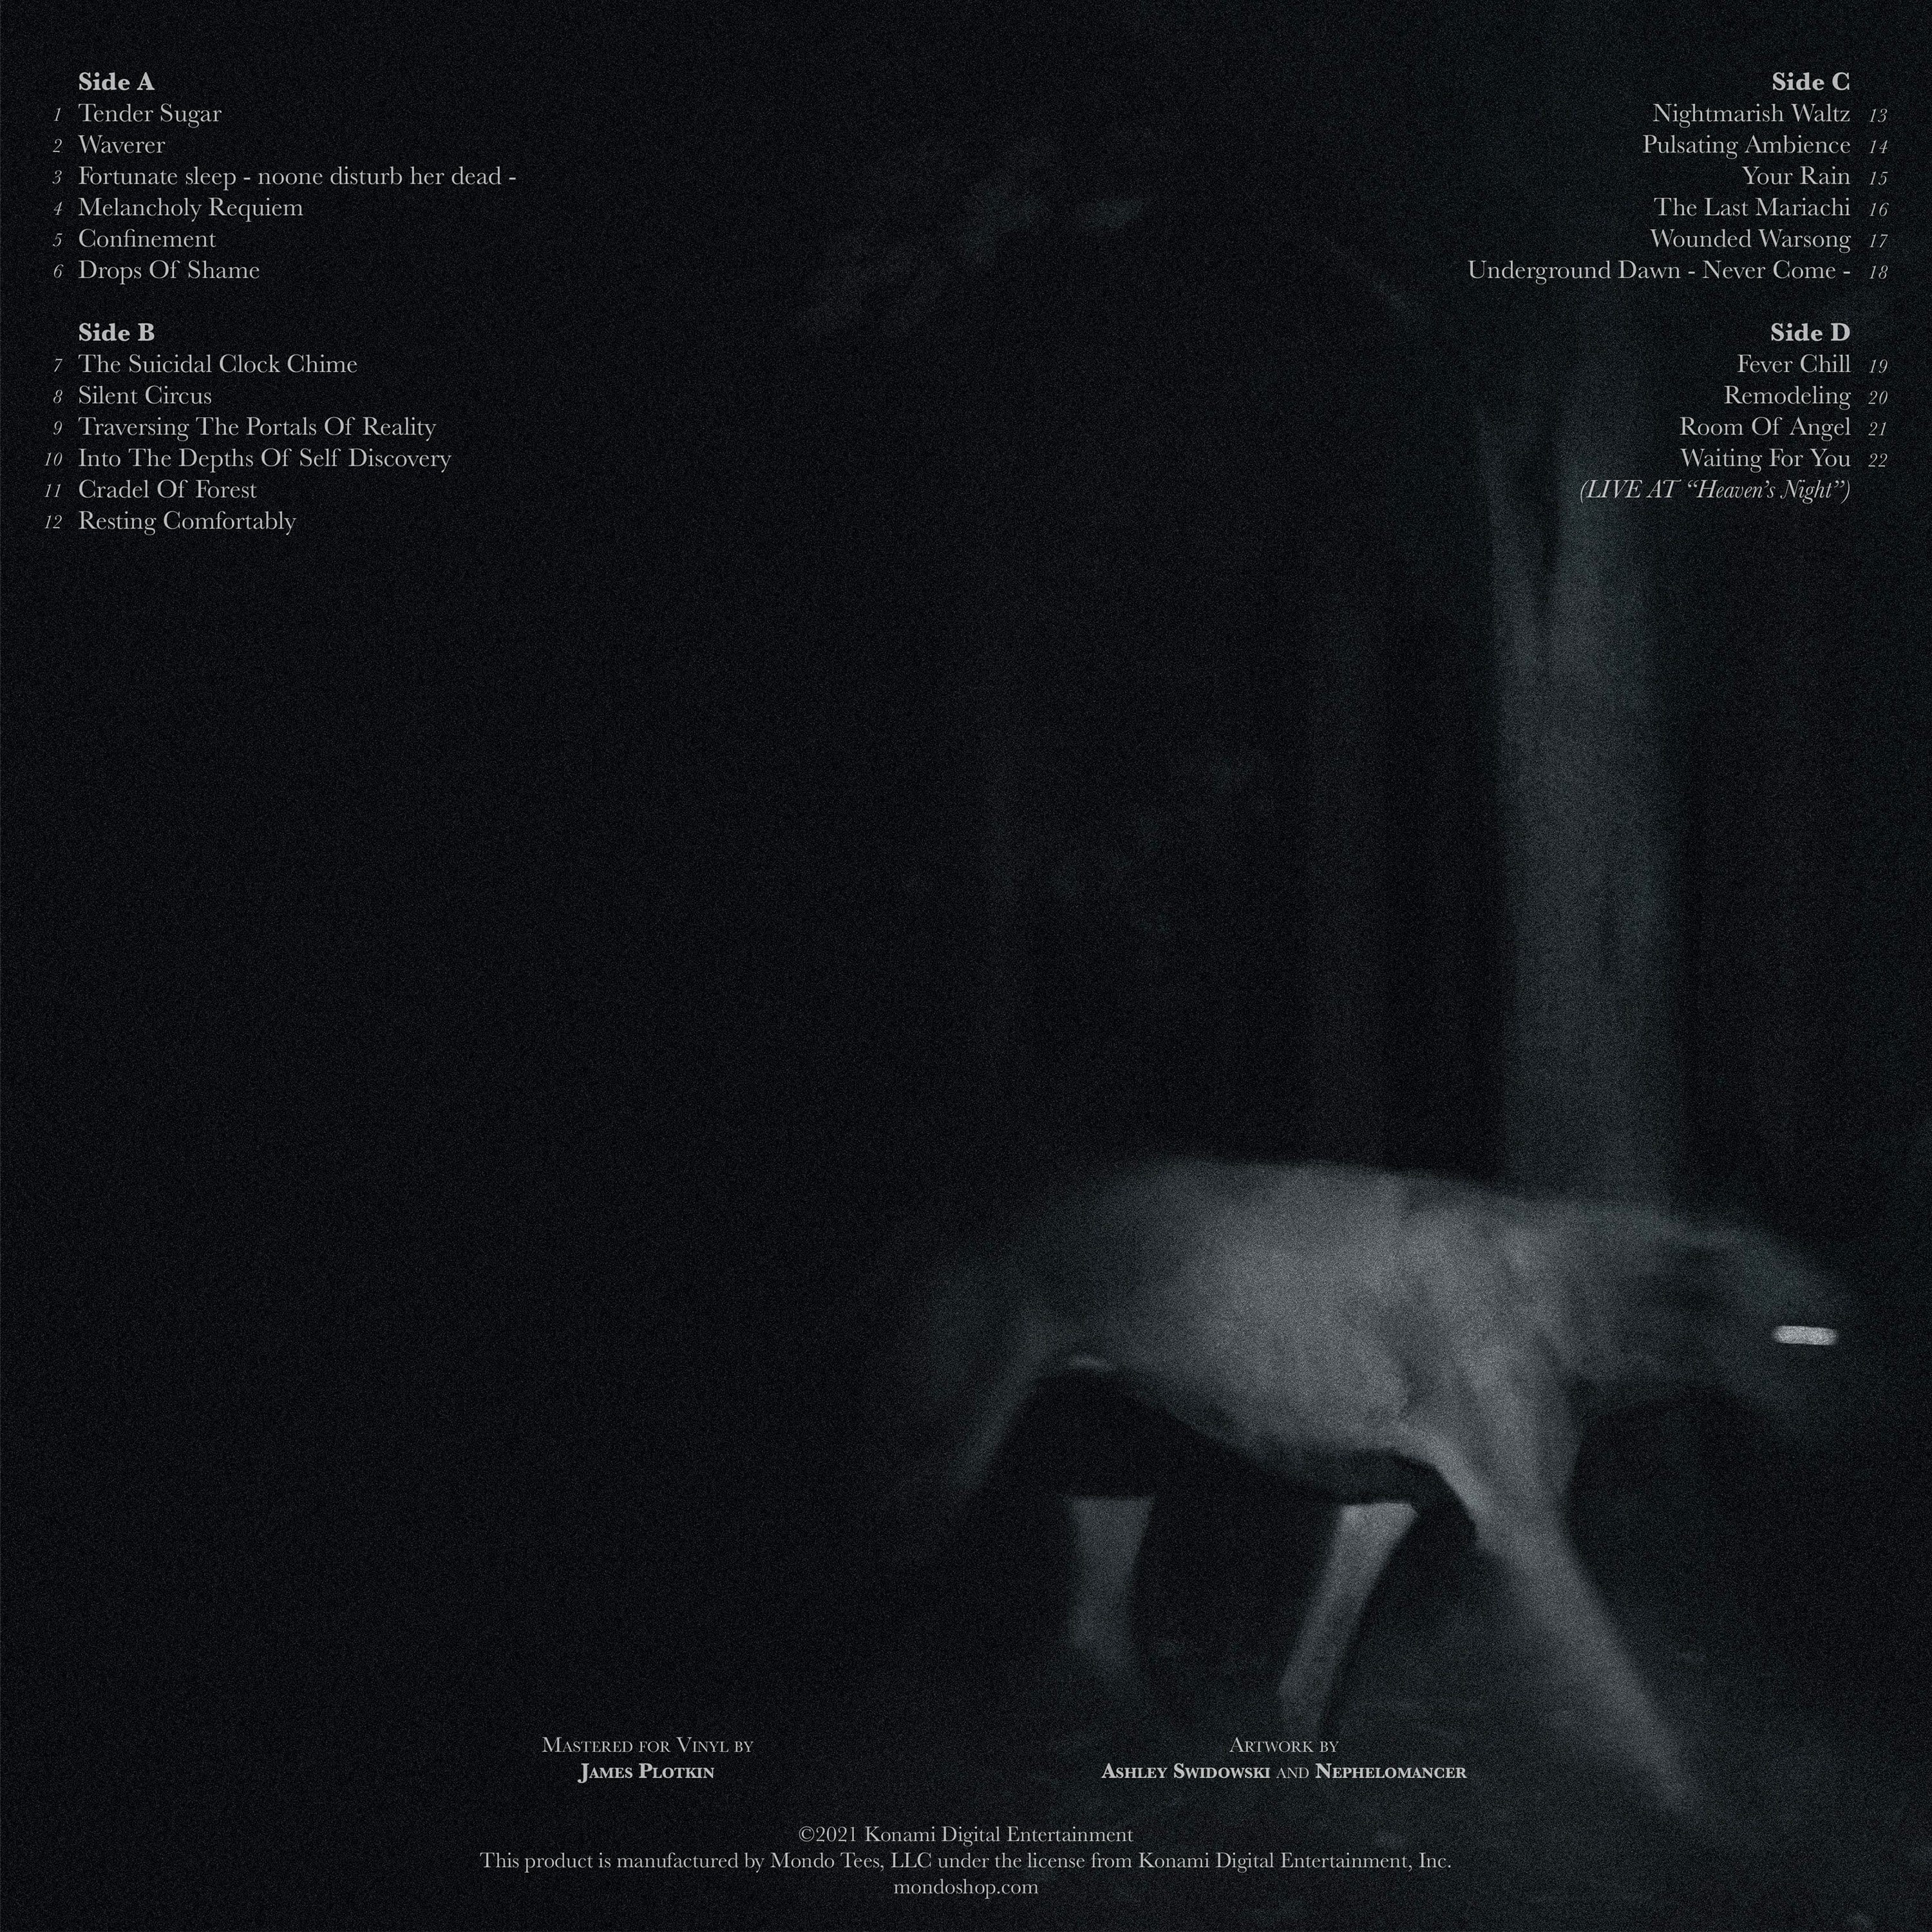 Silent Hill 3 - Original Video Game Soundtrack 2XLP – Mondo